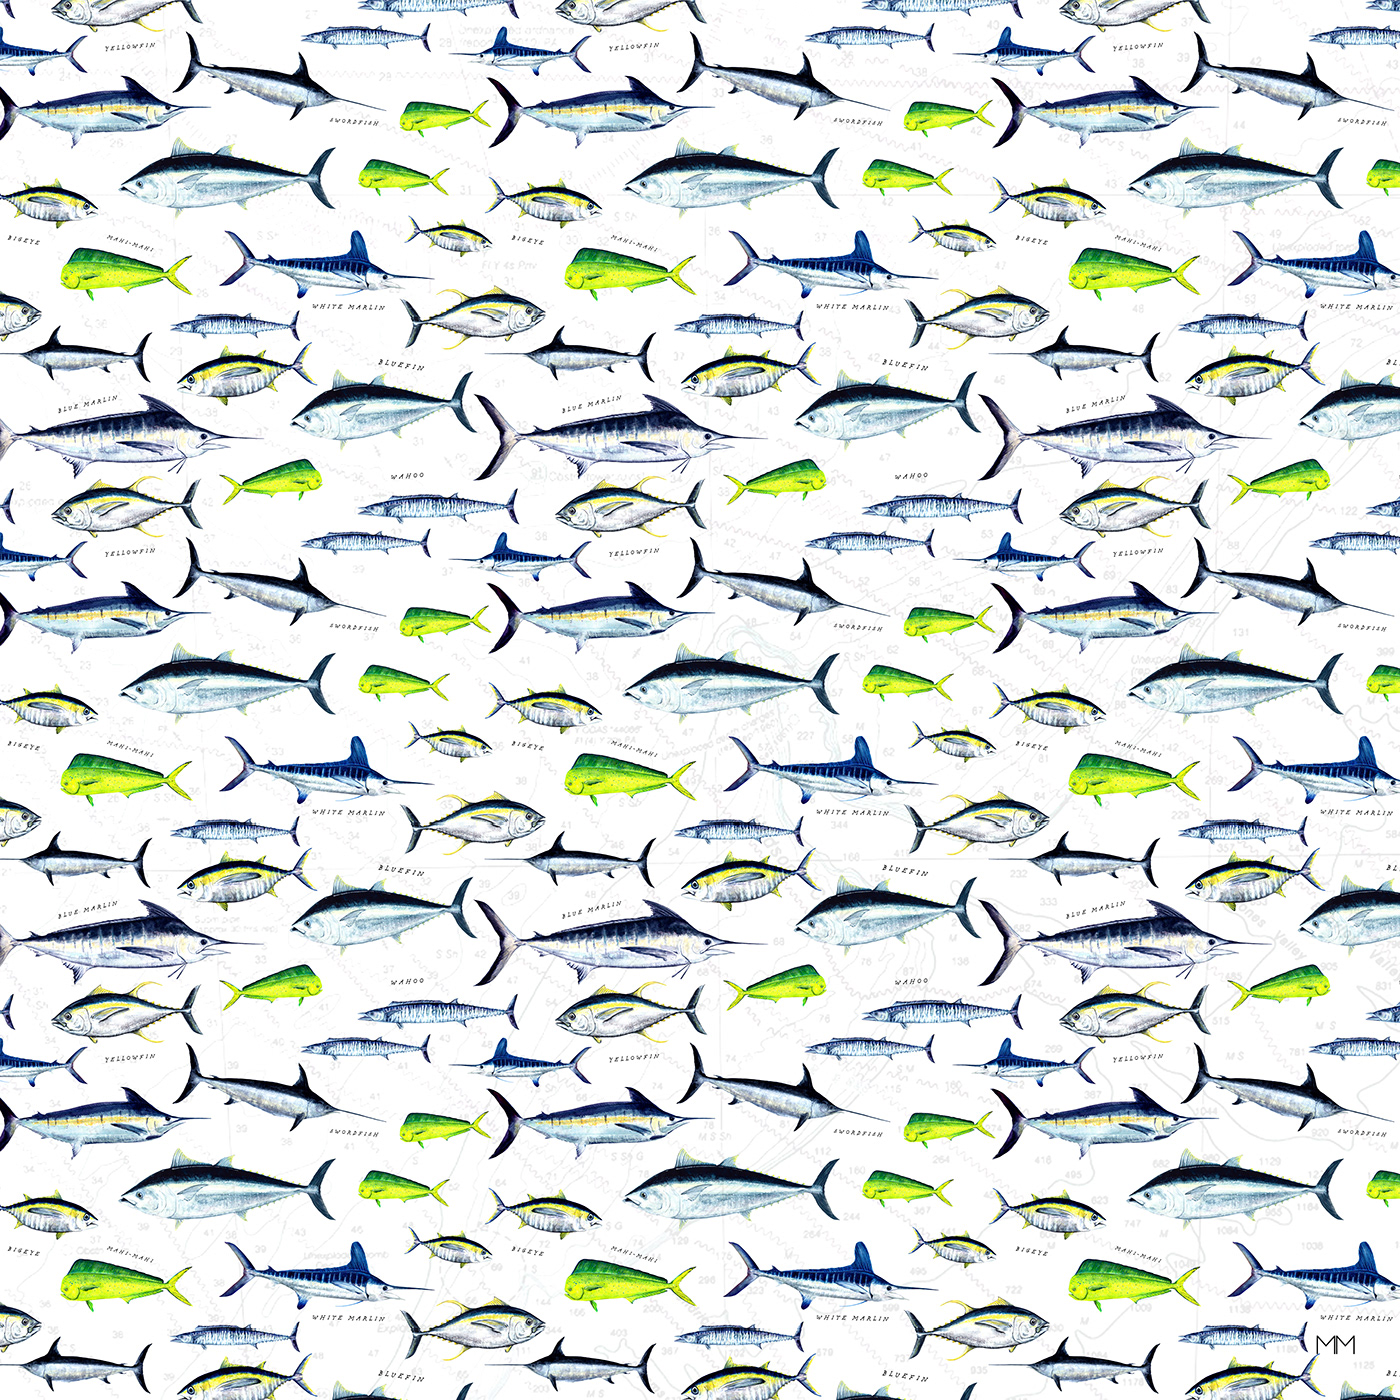 Ocean fish repeat pattern featuring tunas, marlins, mahi, wahoo + swordfish.